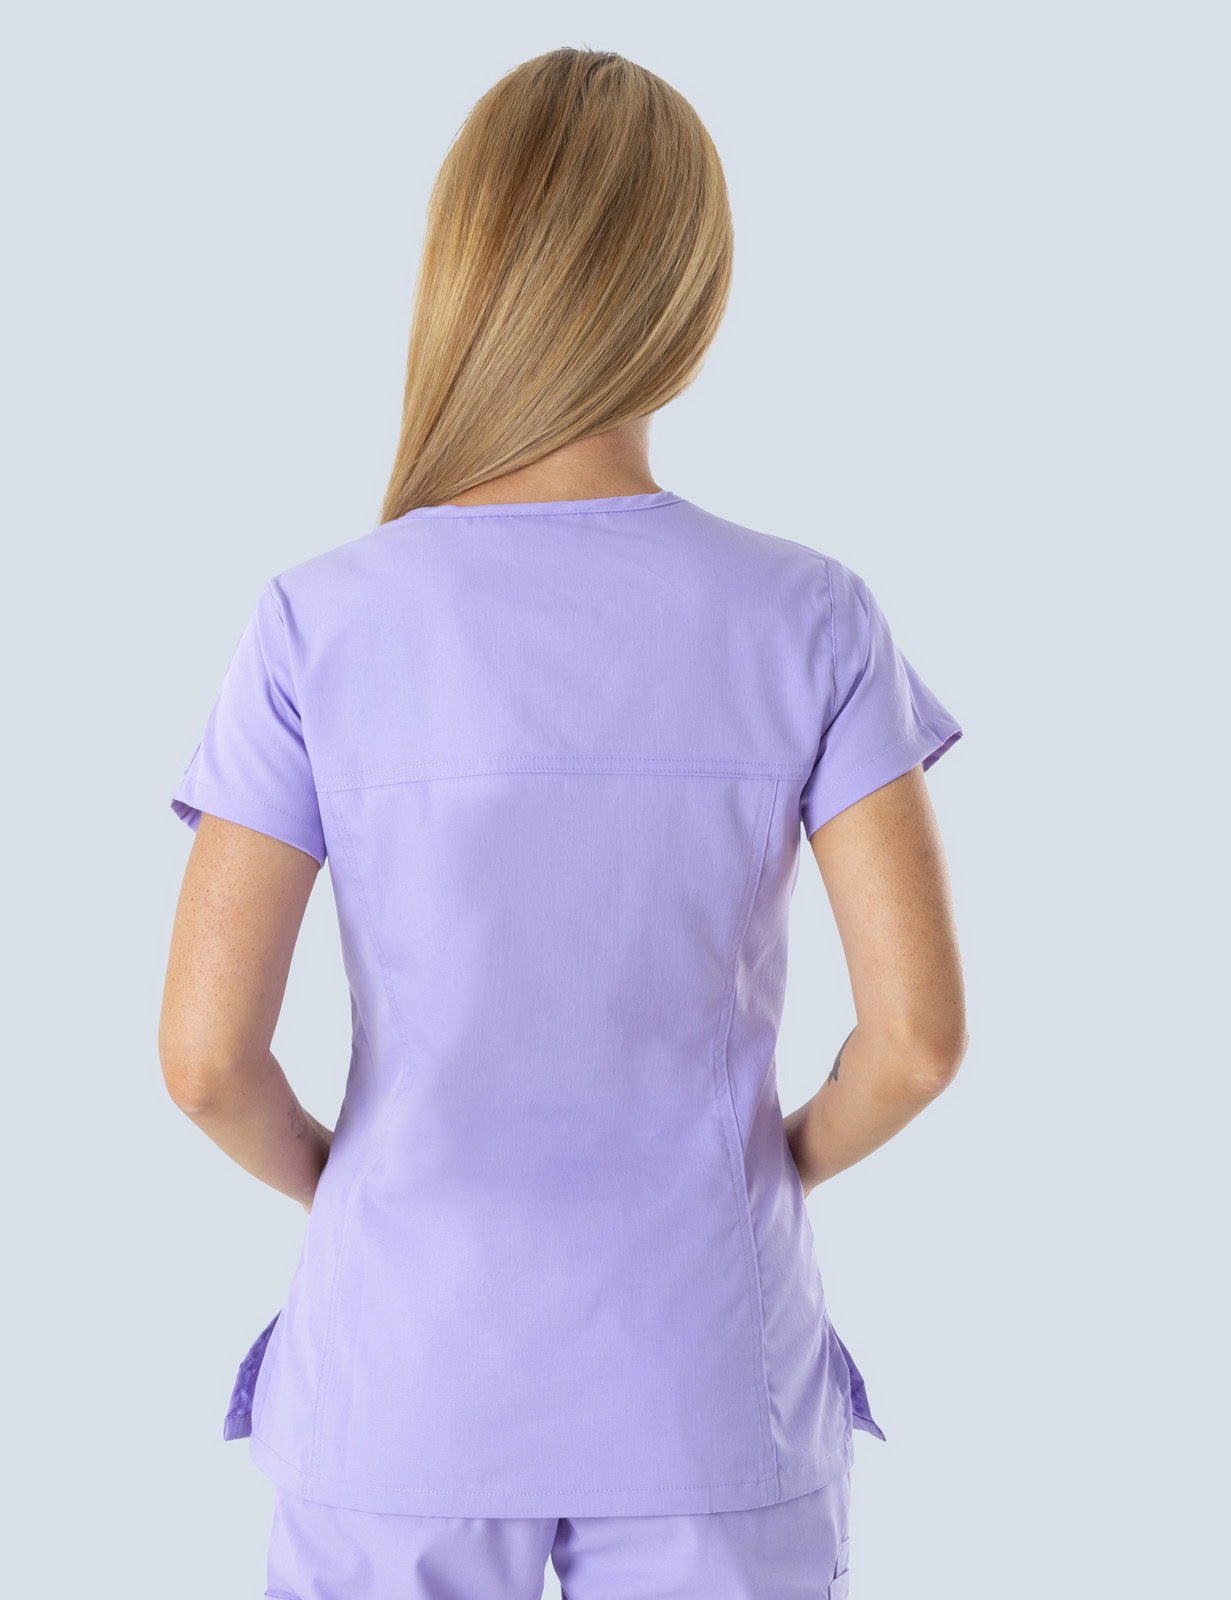 Queensland Children's Hospital Emergency Department Registrar Uniform Top Bundle  (Women's Fit Top in Lilac  incl Logos)